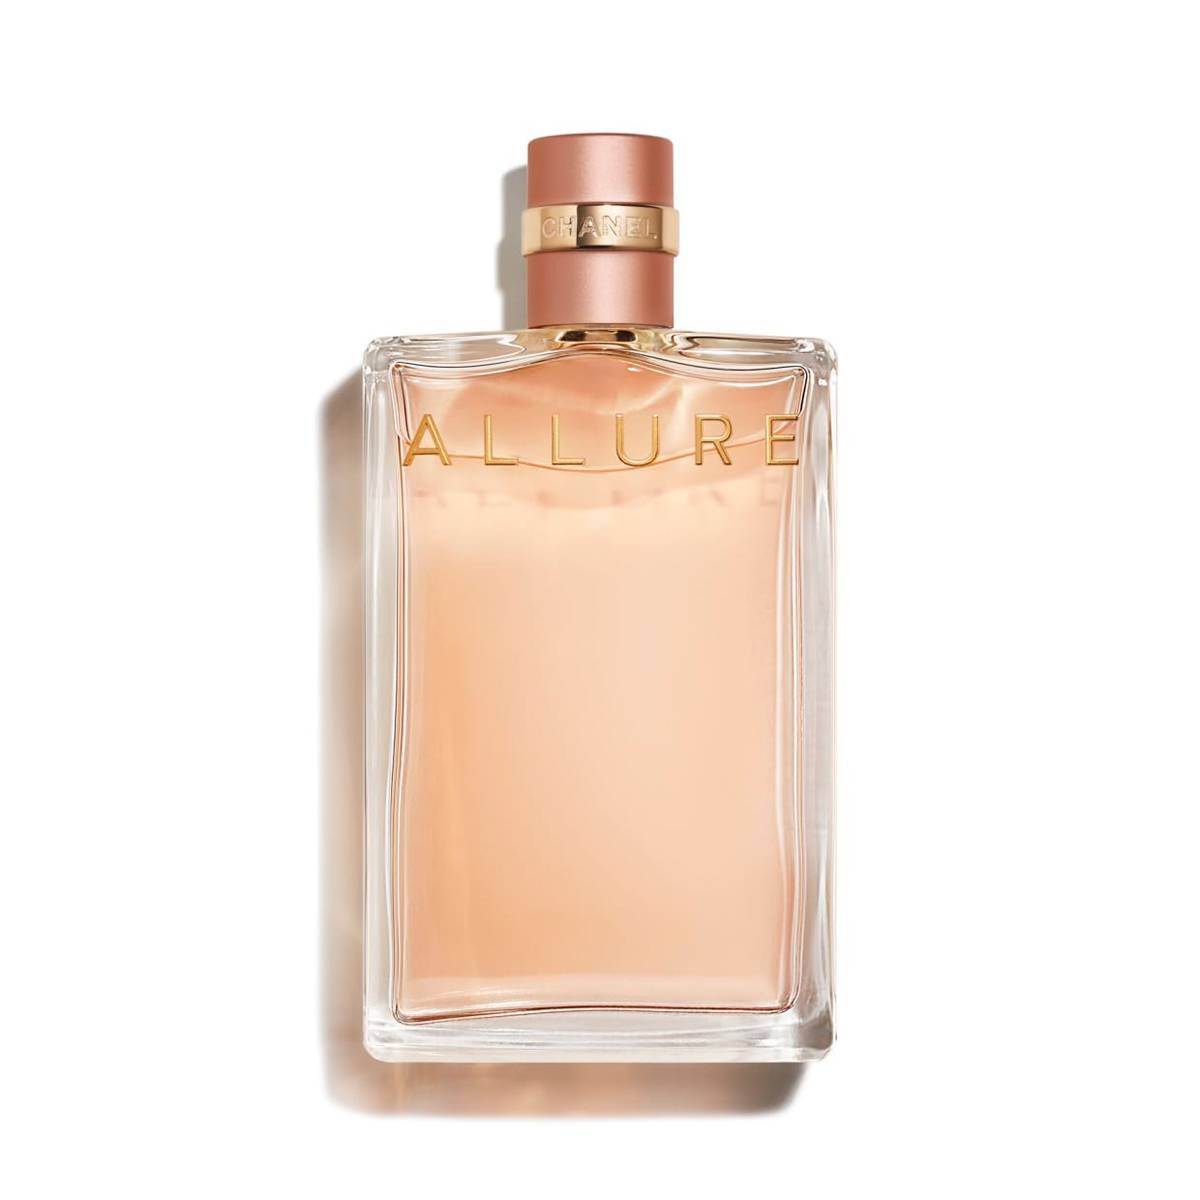  Chanel Allure Eau de Parfum je miris koji će svi obožavati. 